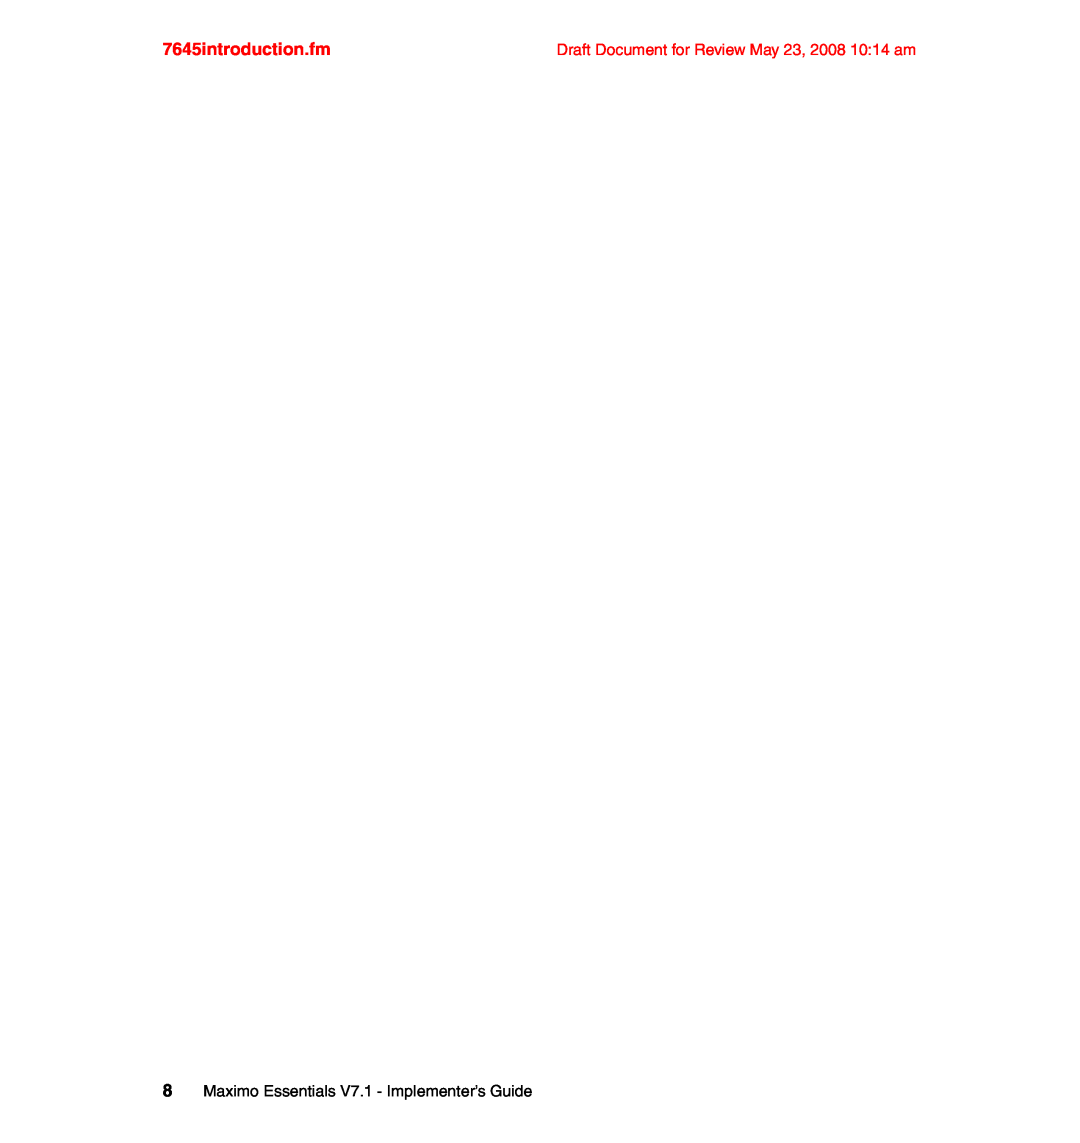 IBM SG24-7645-00 manual 7645introduction.fm, 8Maximo Essentials V7.1 - Implementer’s Guide 